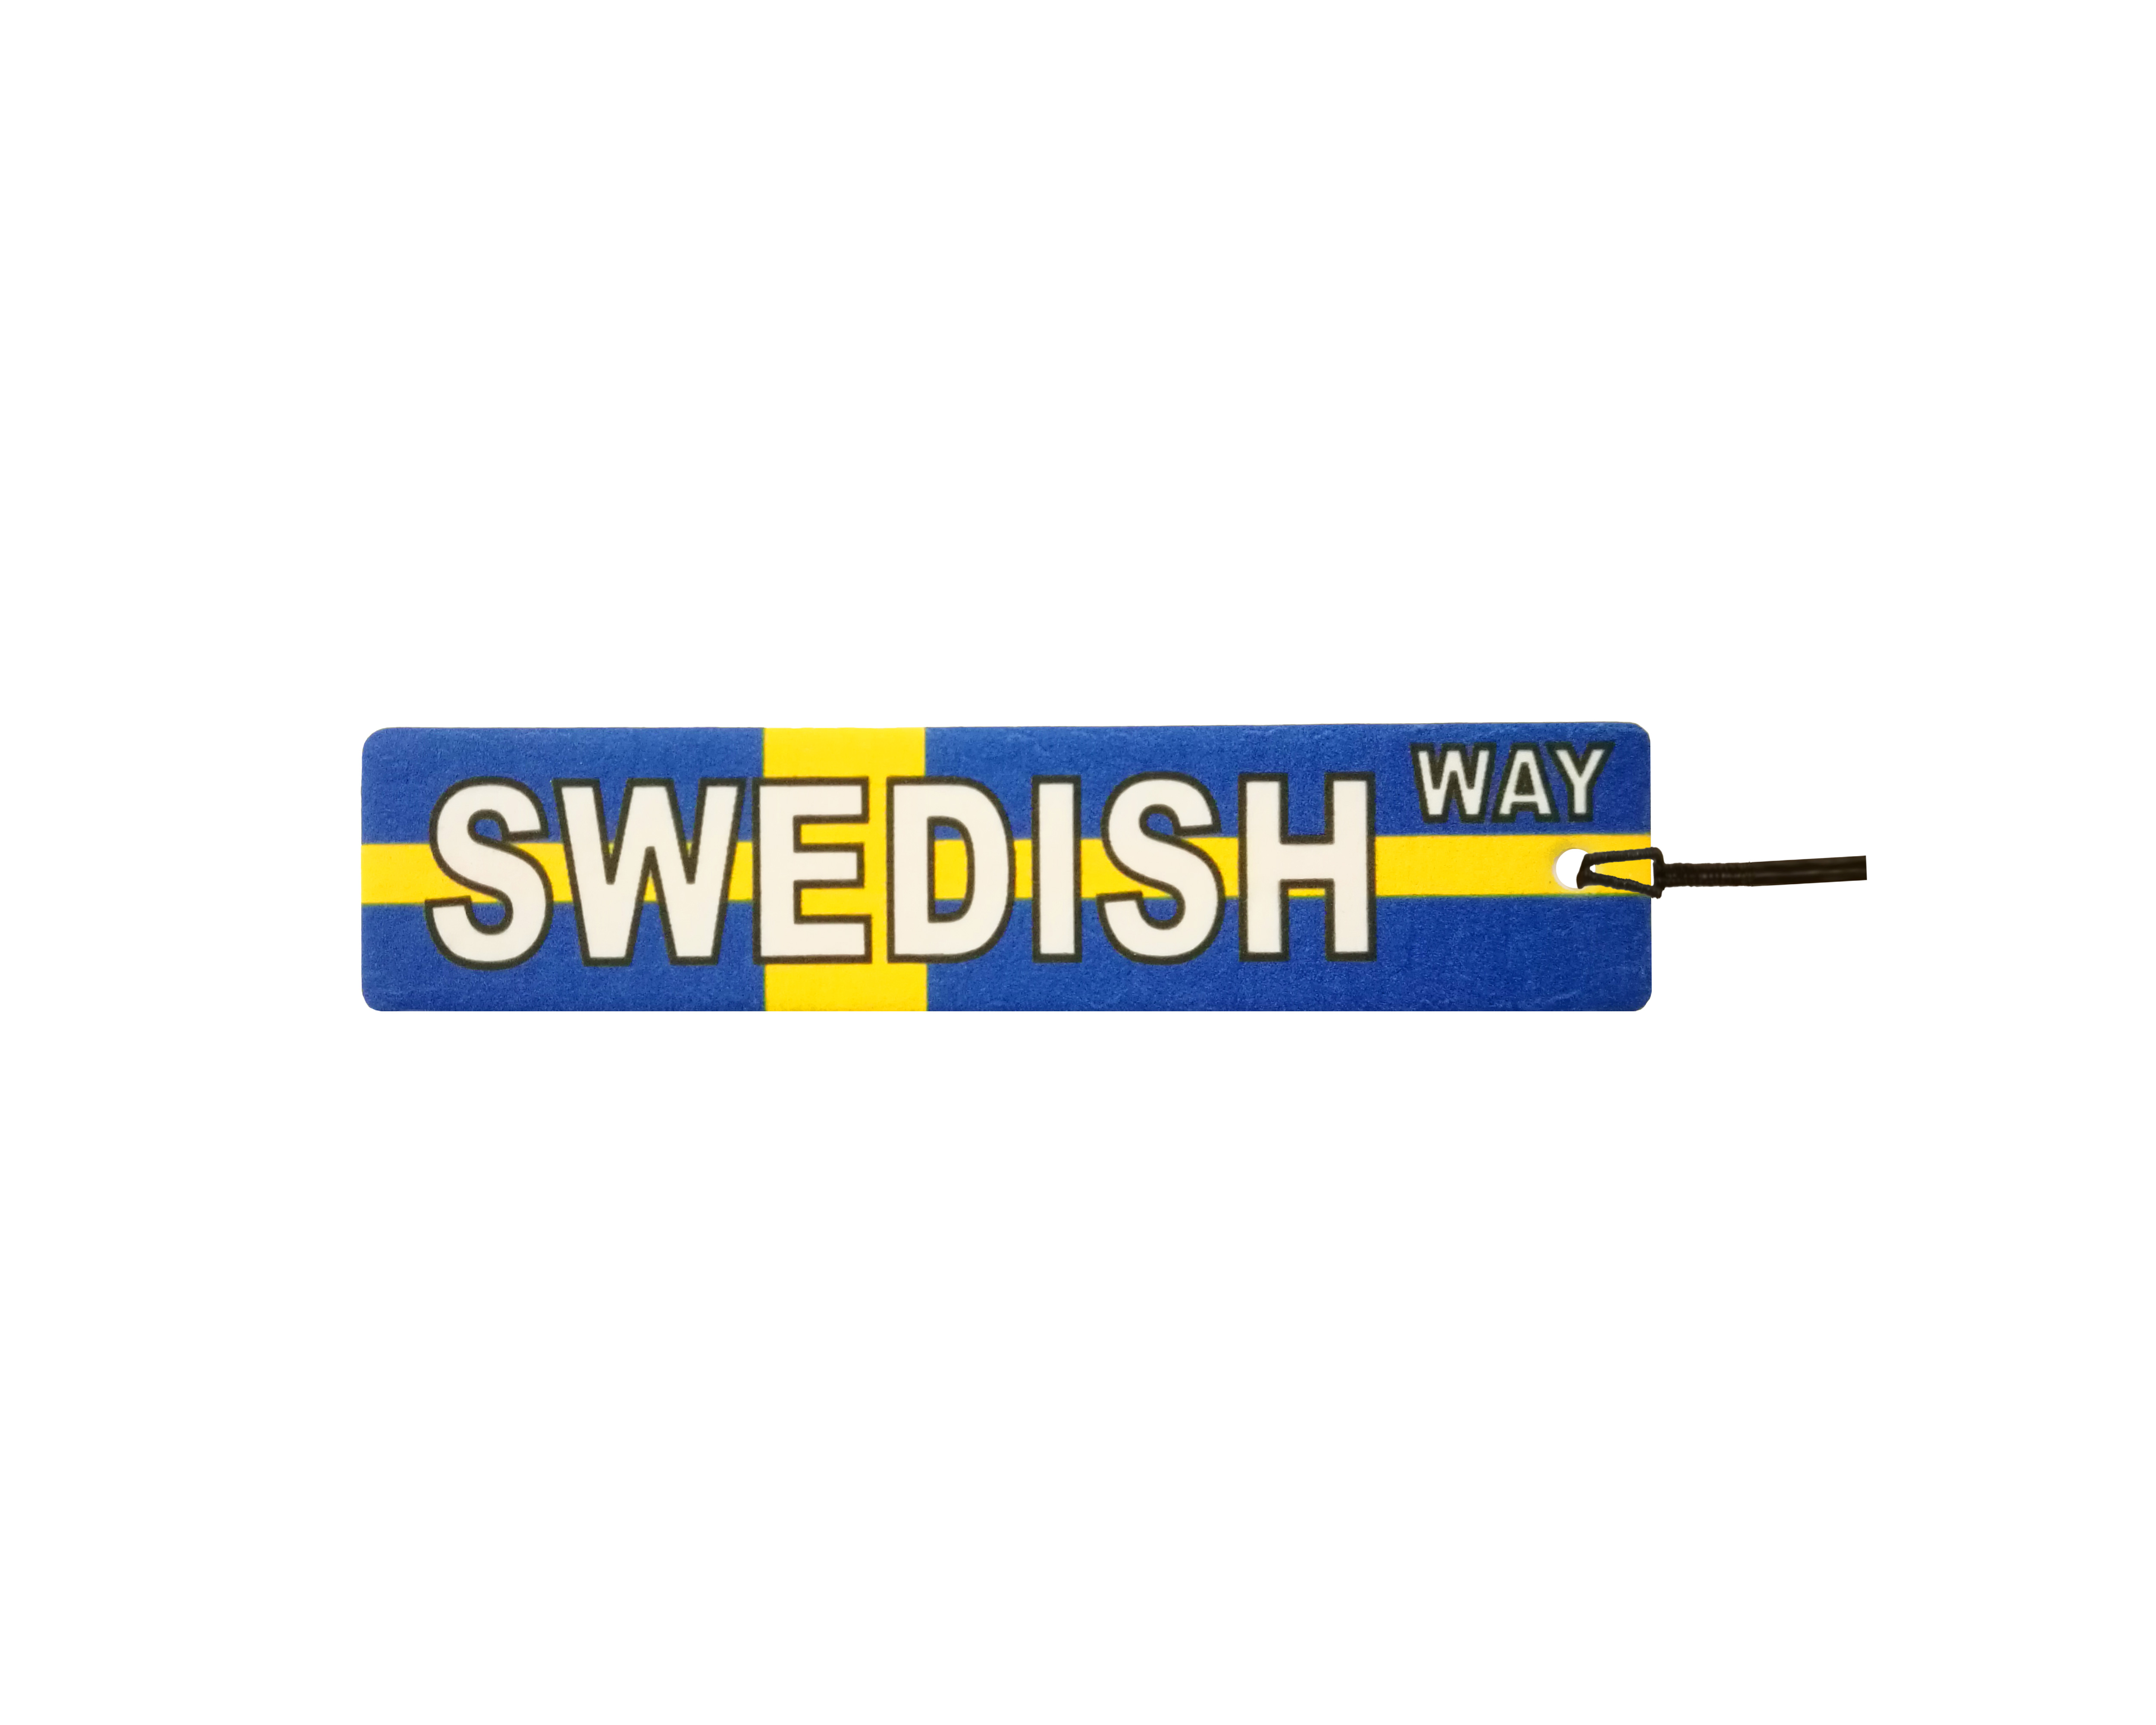 Swedish Way Street Sign